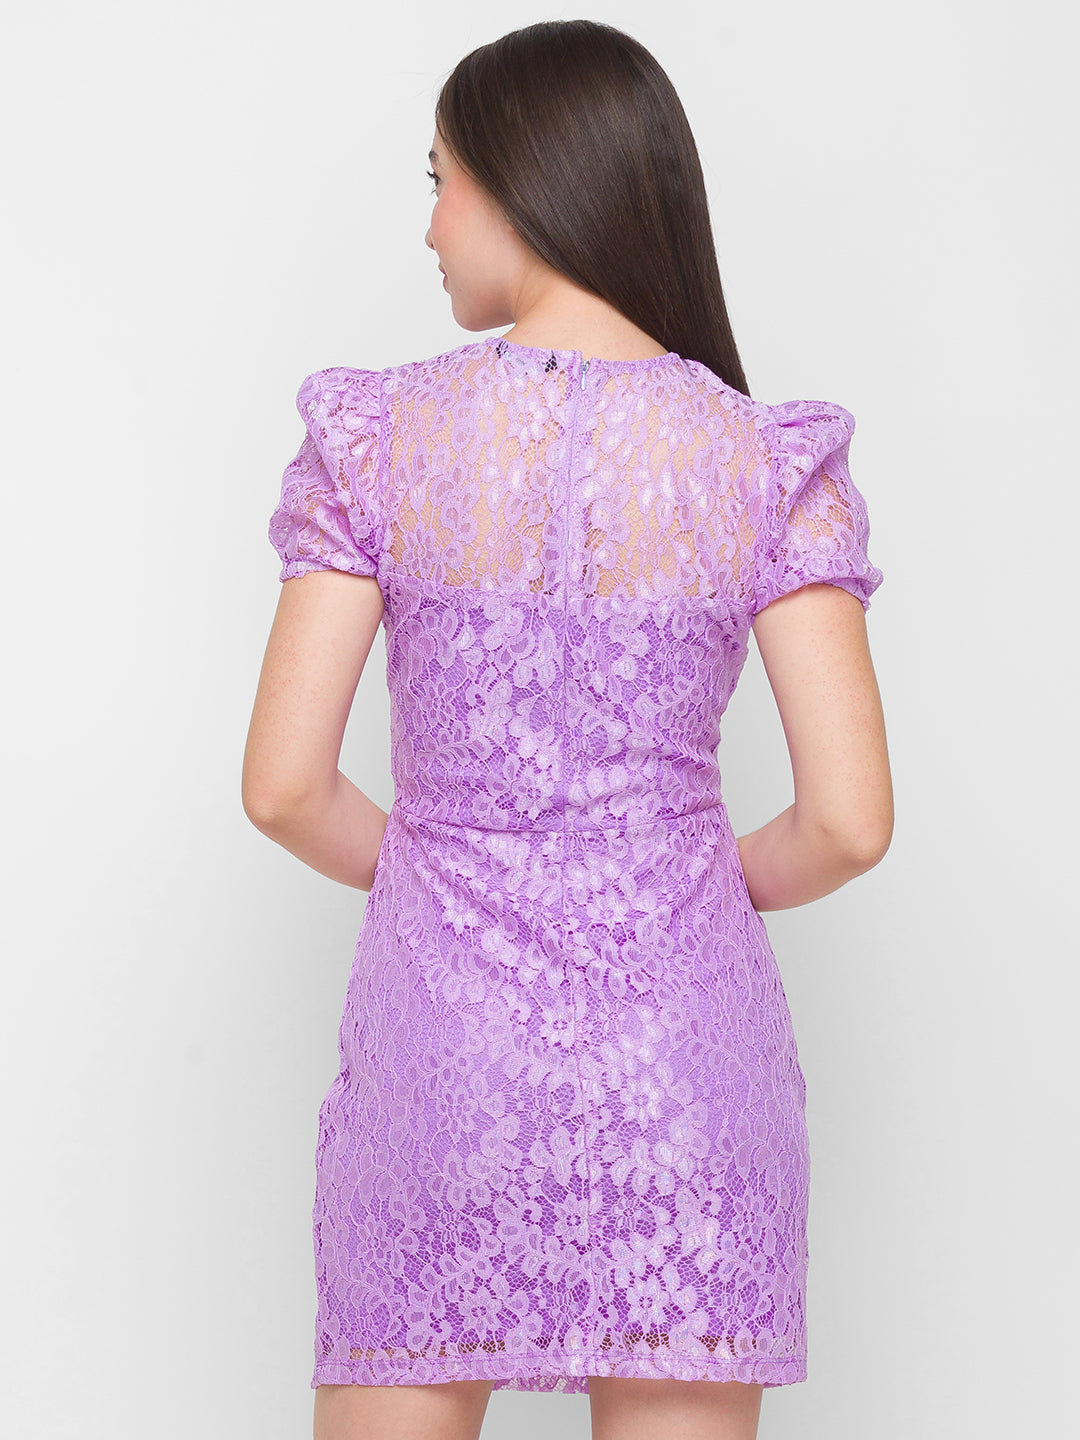 Globus Purple Dyed Dress